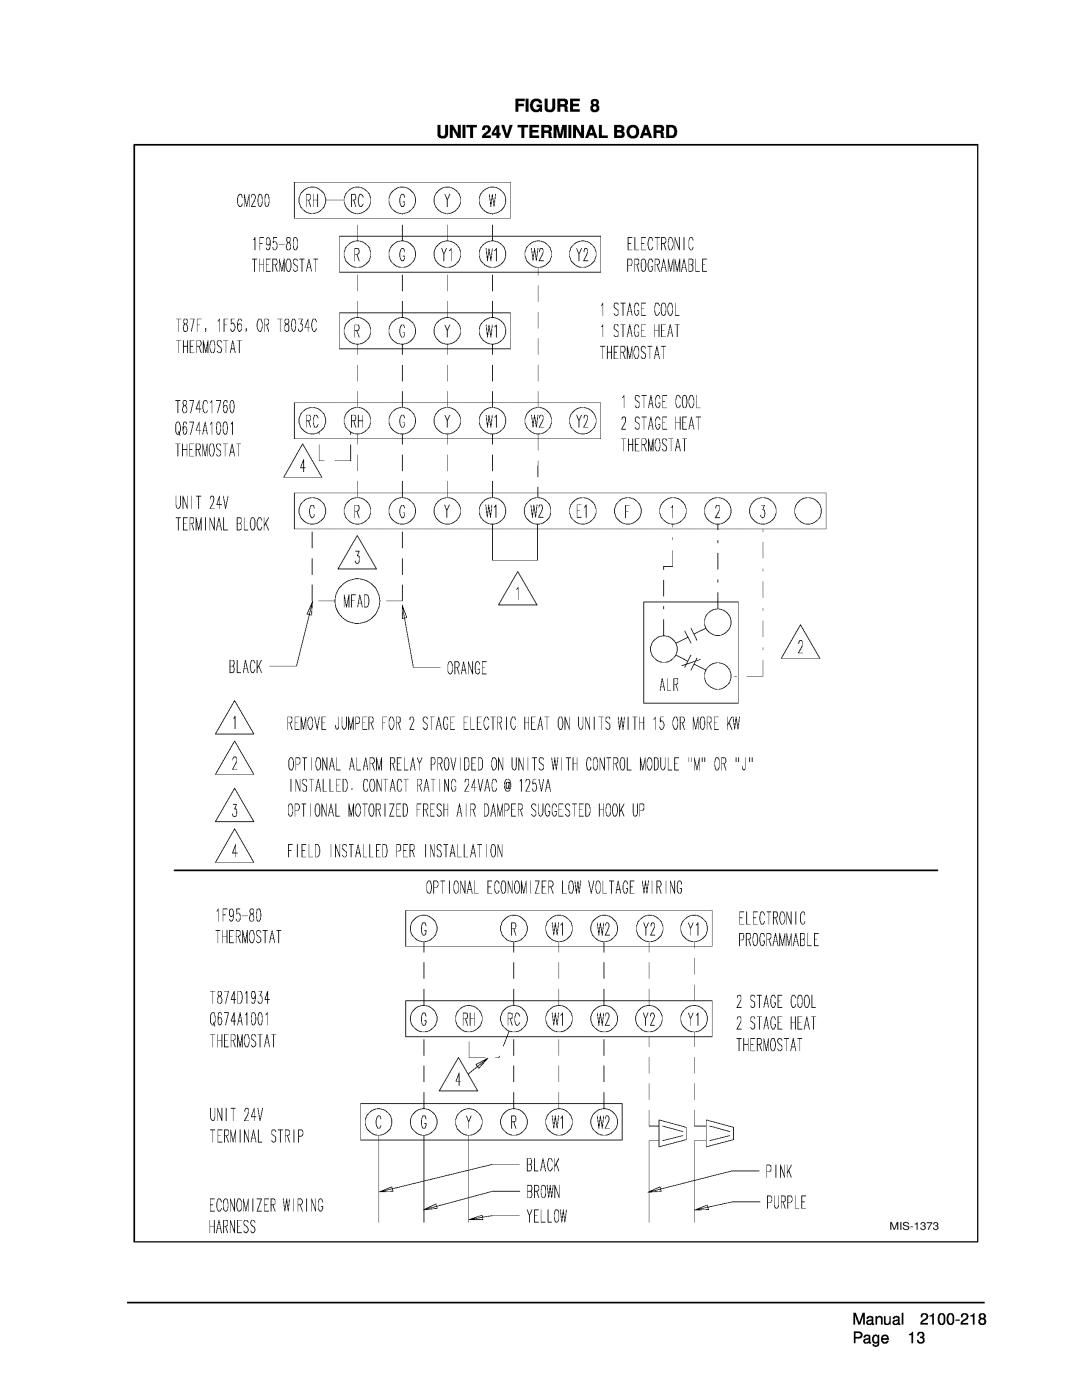 Bard WA482, WA421 installation instructions FIGURE UNIT 24V TERMINAL BOARD, Manual, 2100-218, Page 